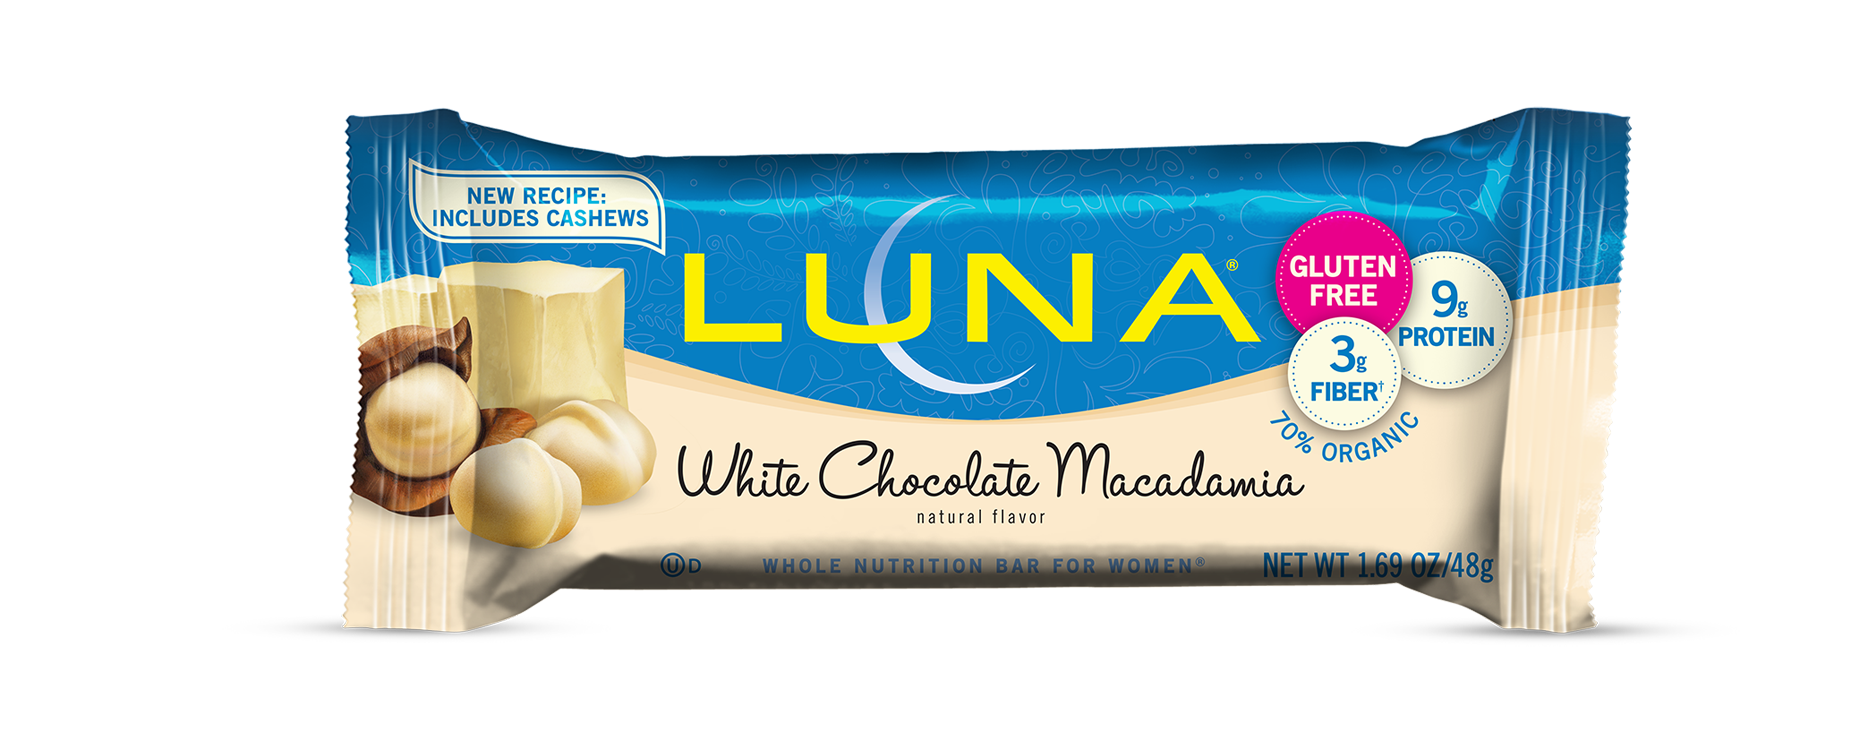 Luna White Chocolate Macadamia